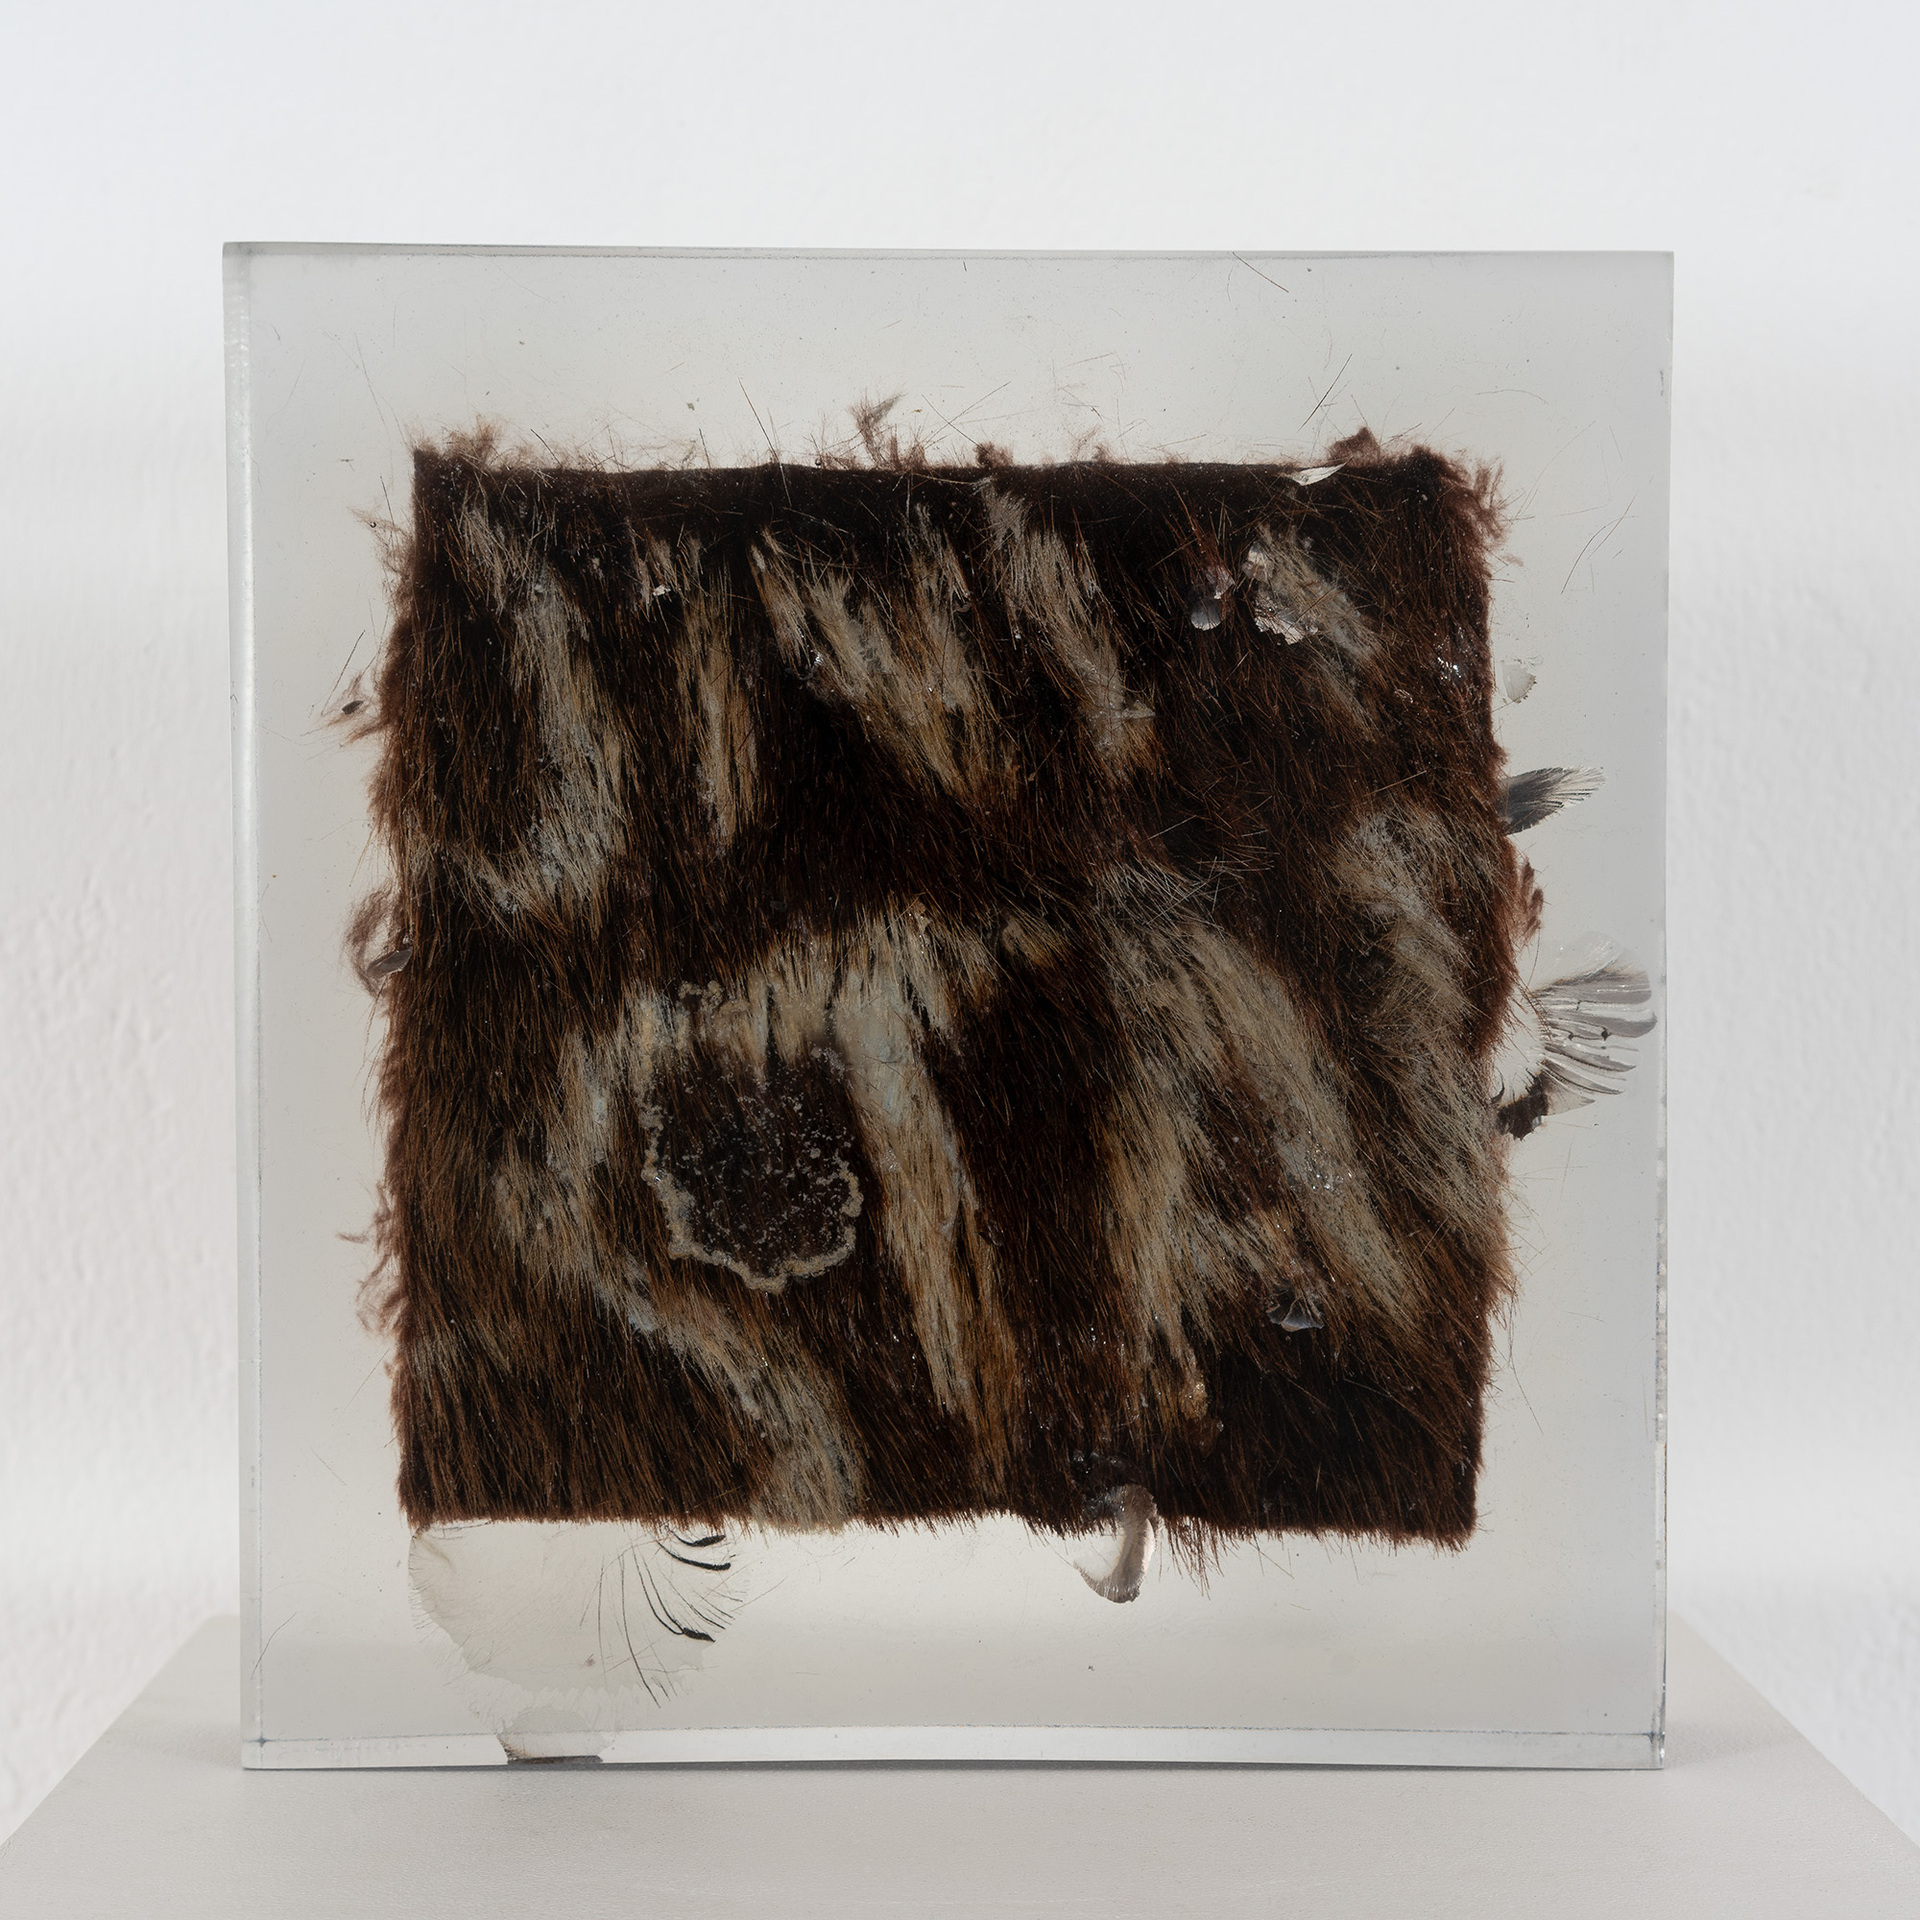 Rebekka Benzenberg, G-STAR, 2021, Fur and bleaching agent in polyester resin, ca. 26 x 26 x 5 cm